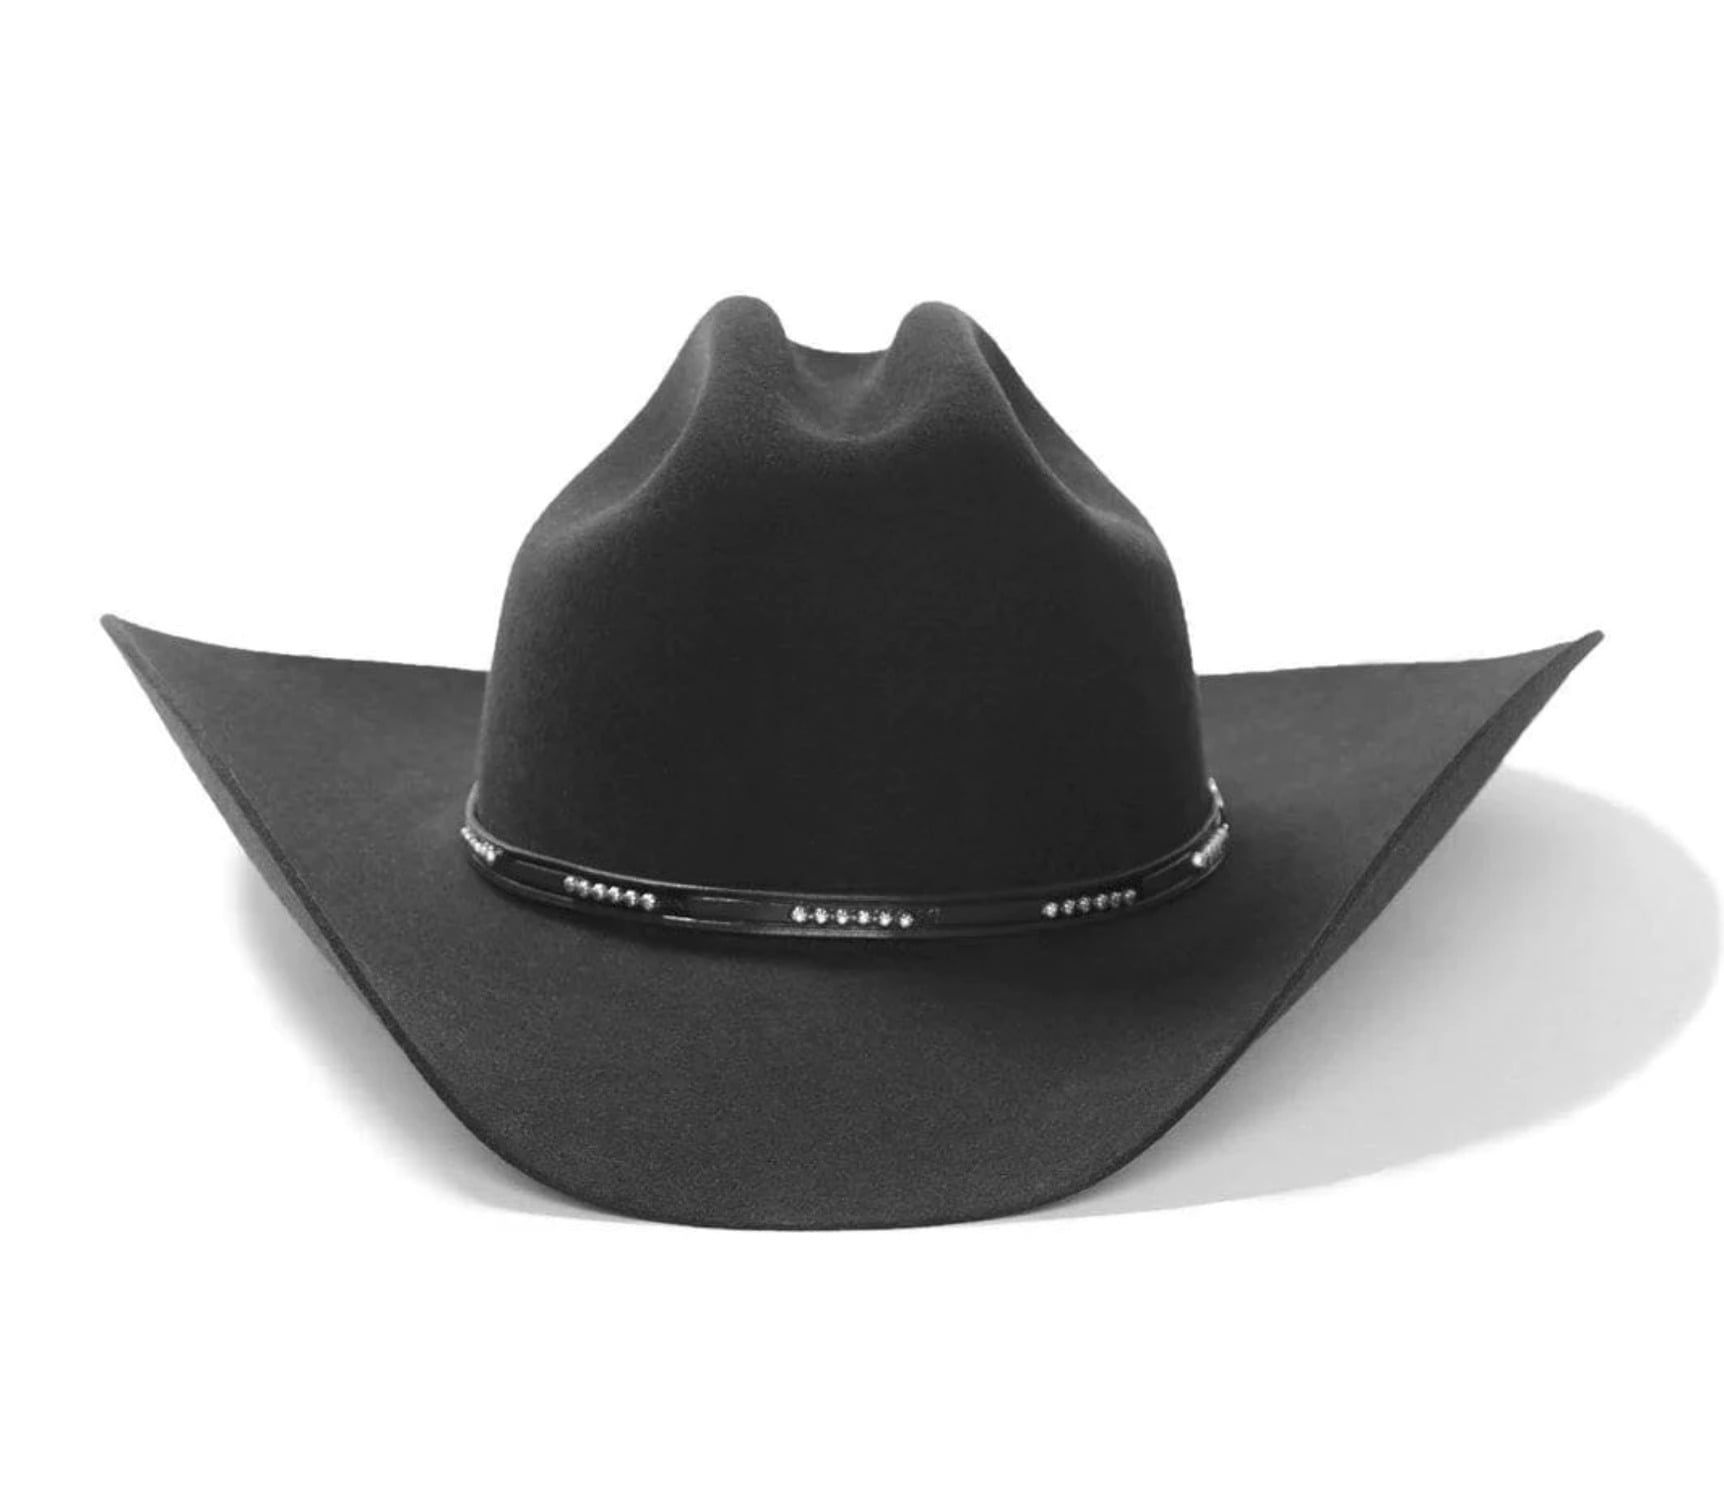 Stetson Regular Oval Dice Wool Felt Hat - Black - Black - 7 5/8